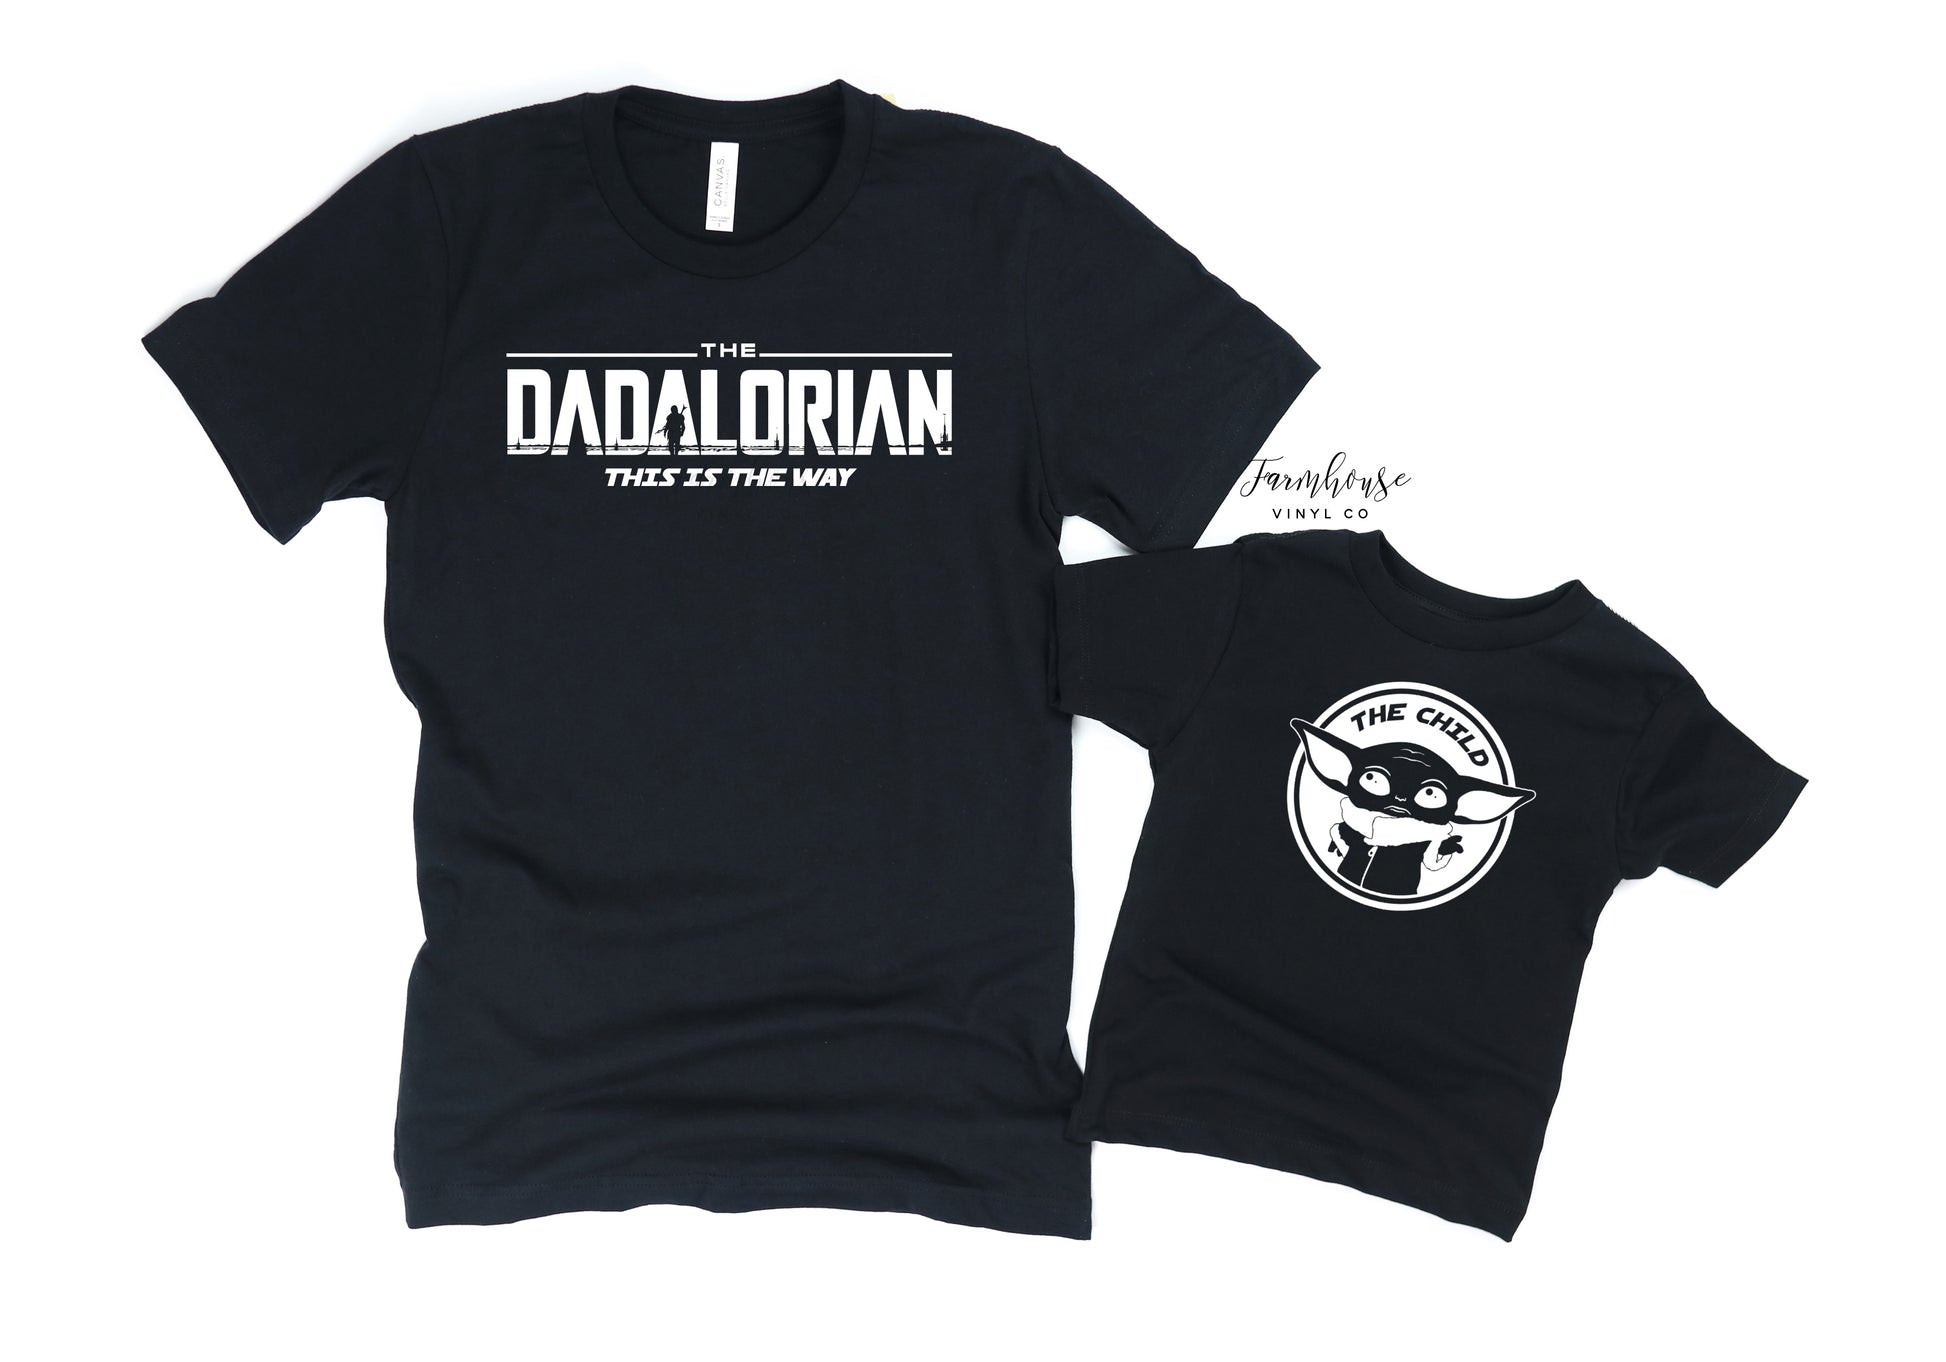 Star Wars Dadalorian and The Child Shirt Set - Farmhouse Vinyl Co